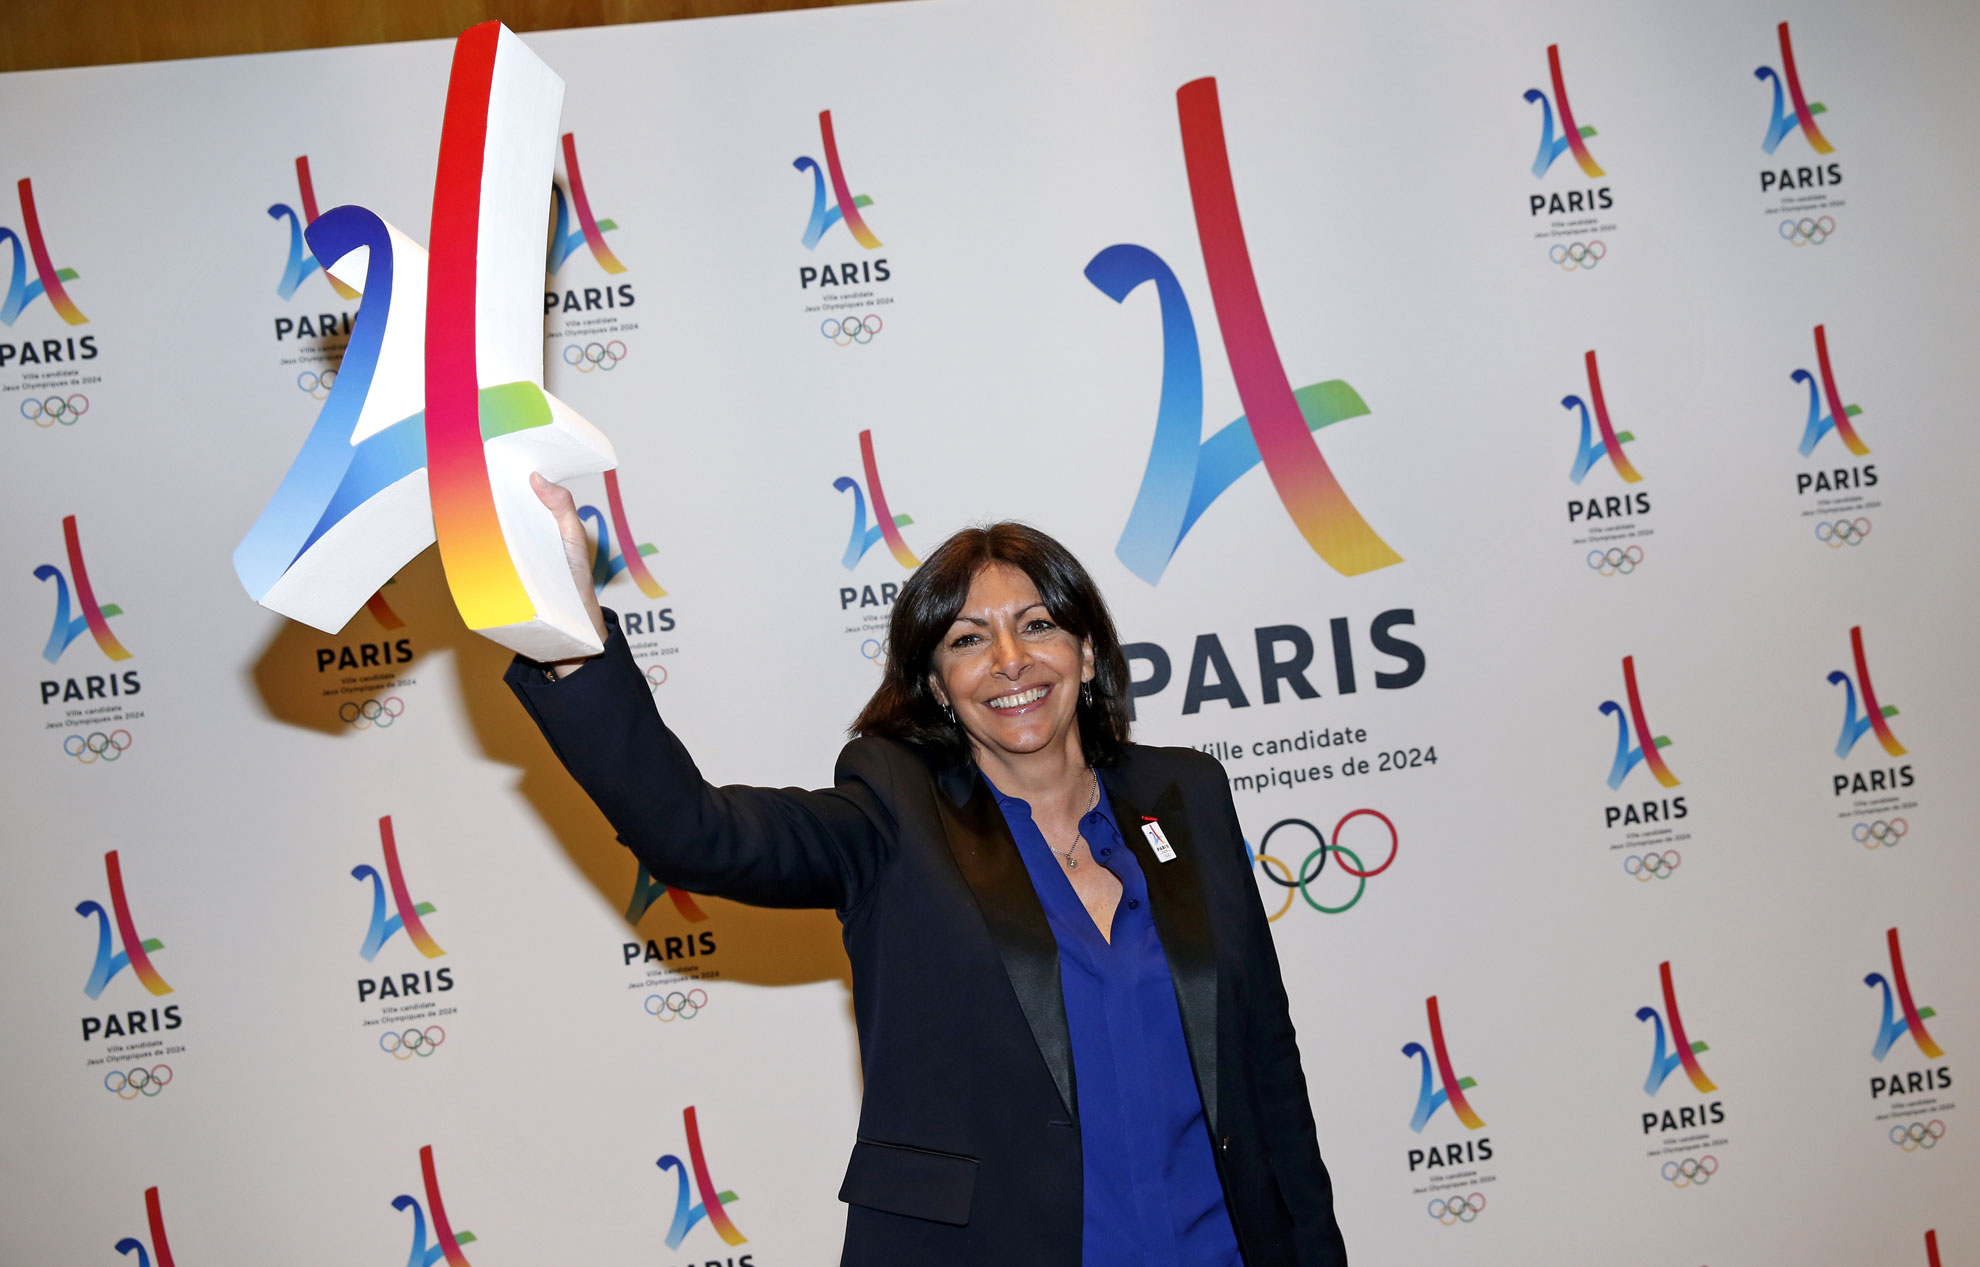 Paris Mayor Says Coronavirus Presents Challenges for 2024 Olympics